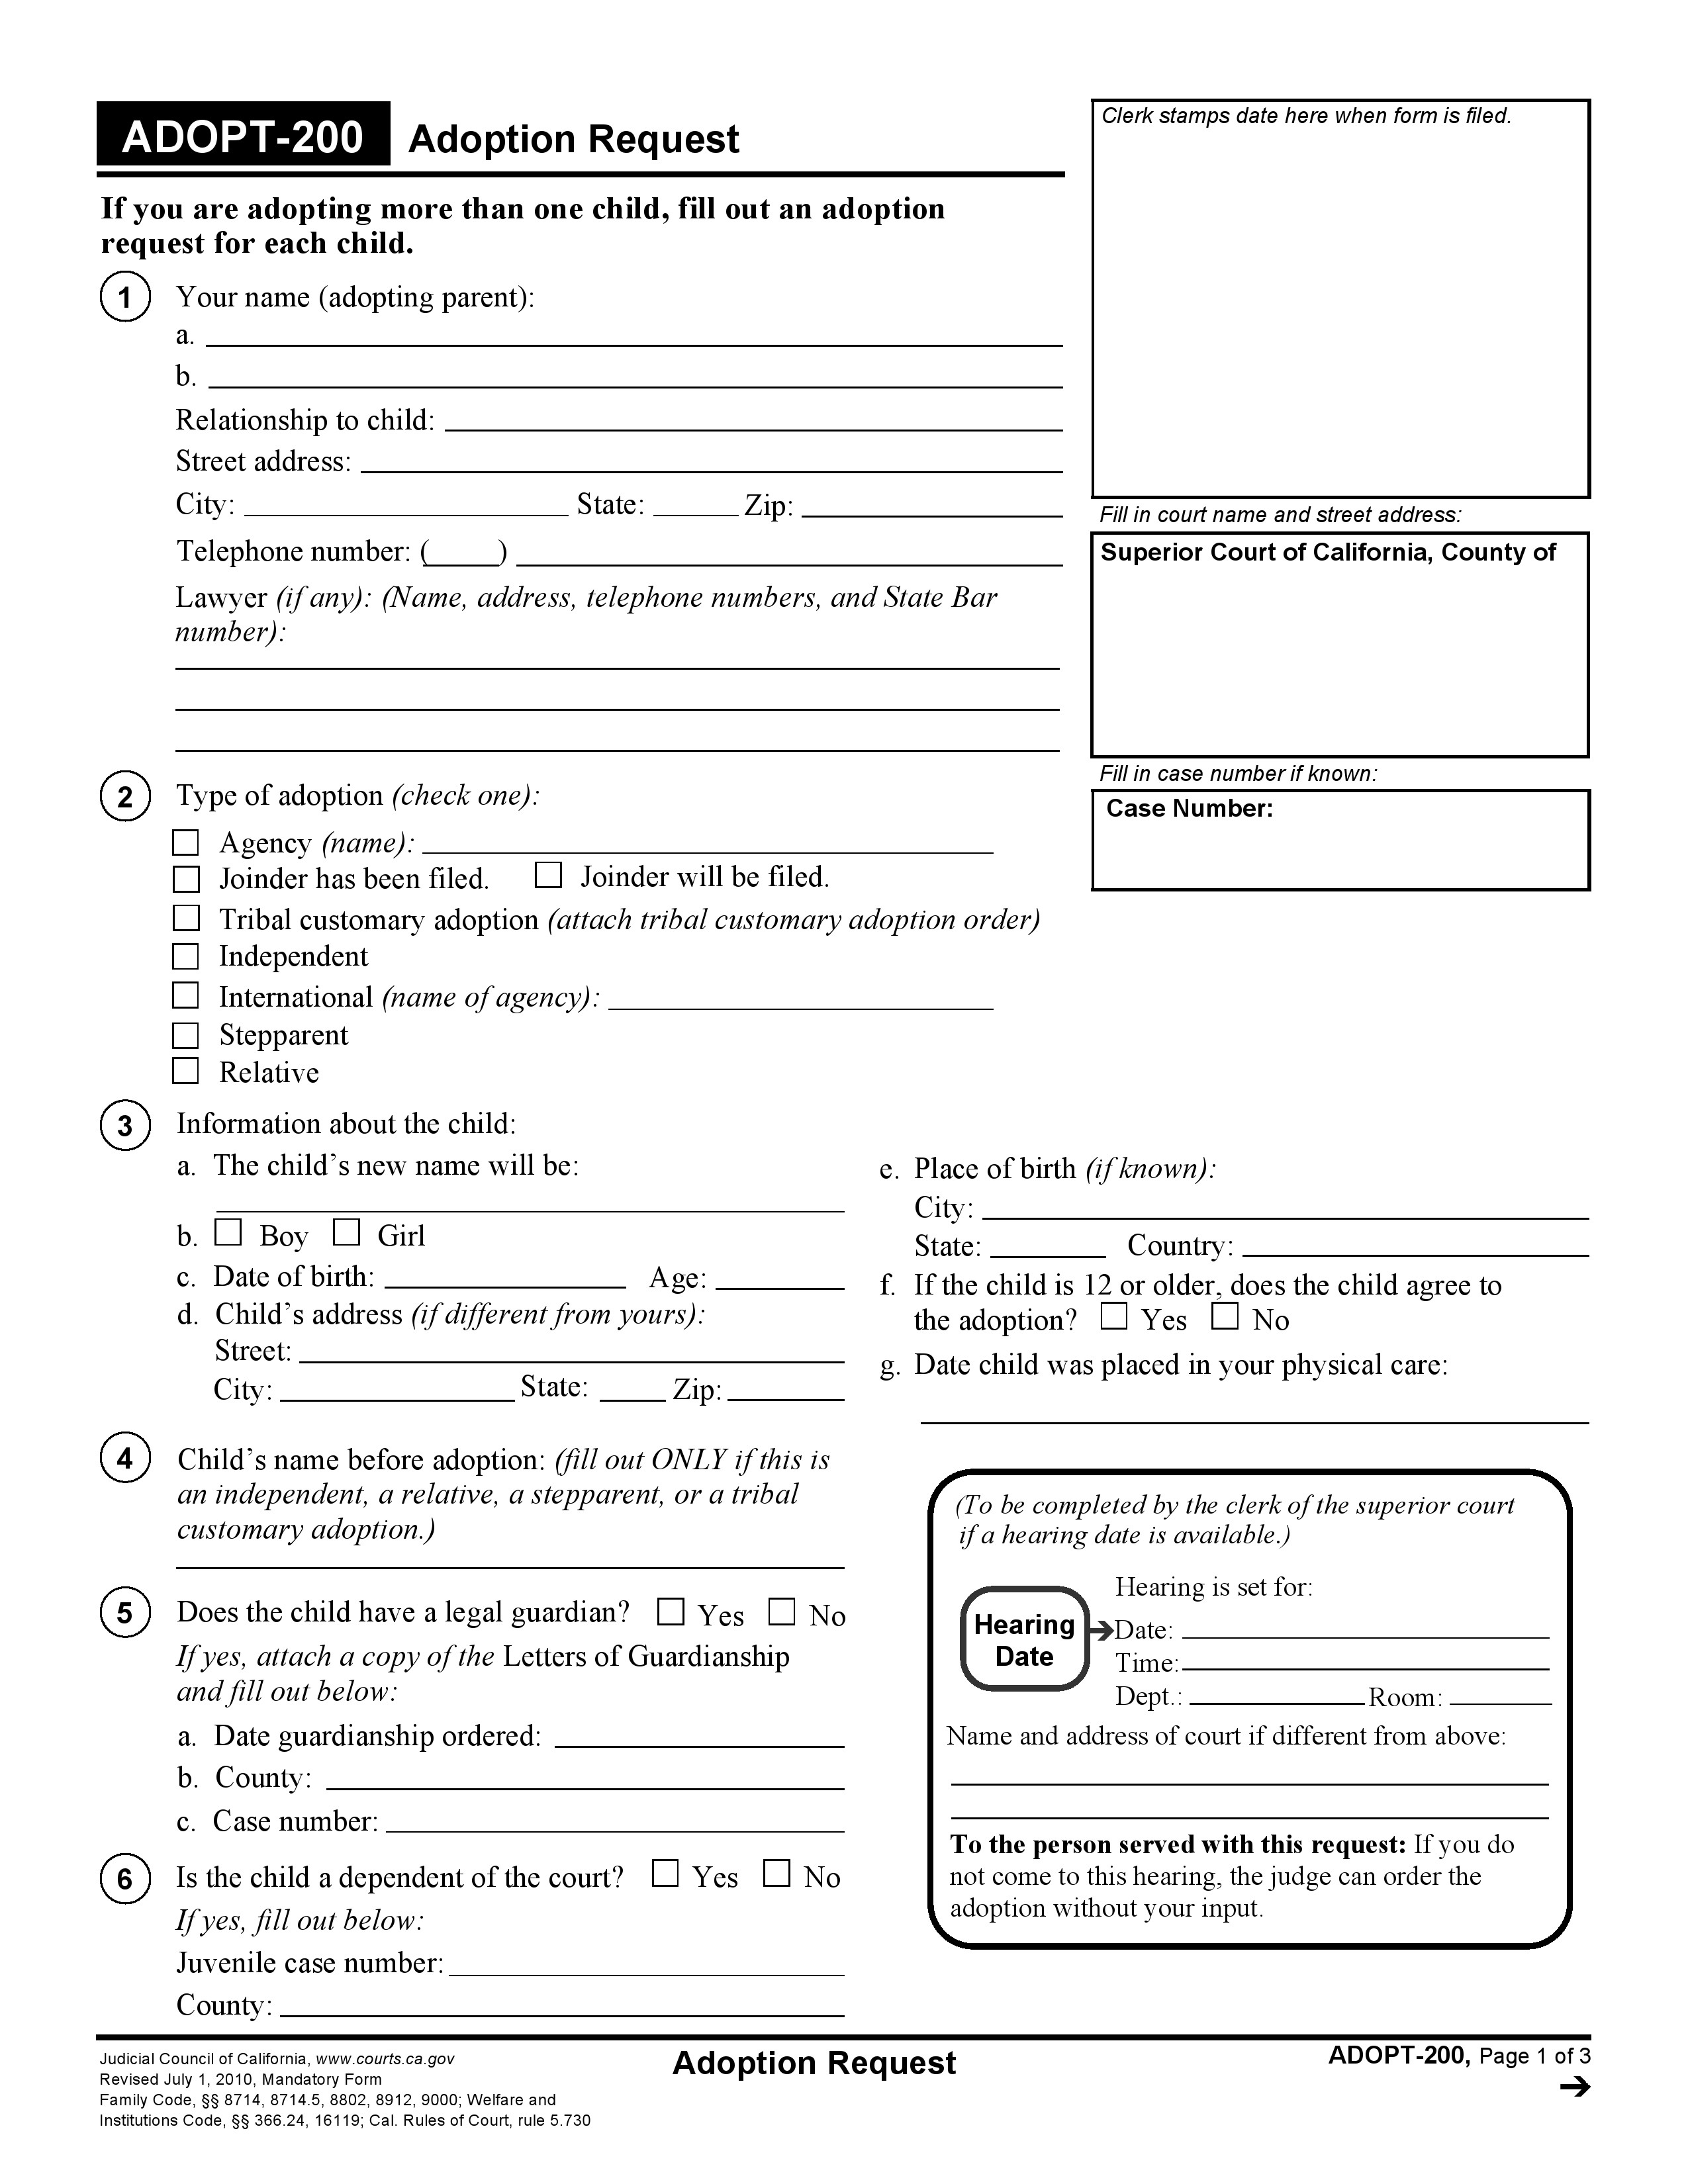 Free California Adopt 200 Adoption Request Form | Pdf Template - Free Printable Legal Forms California